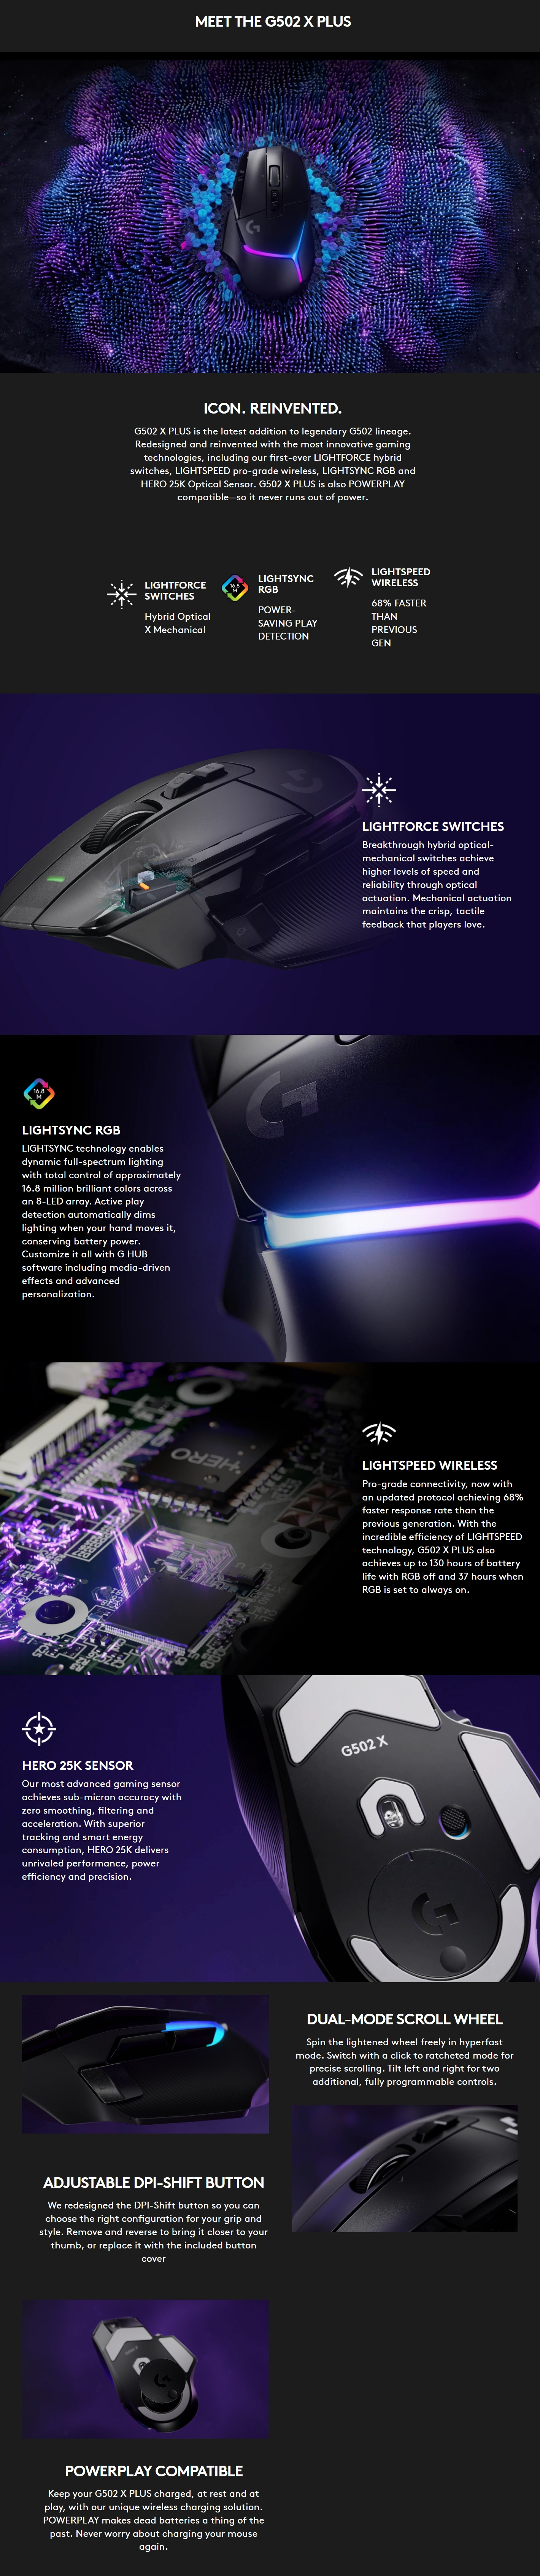 Logitech-G502-X-Plus-Wireless-RGB-Optical-Gaming-Mouse-Black-910-006164-13